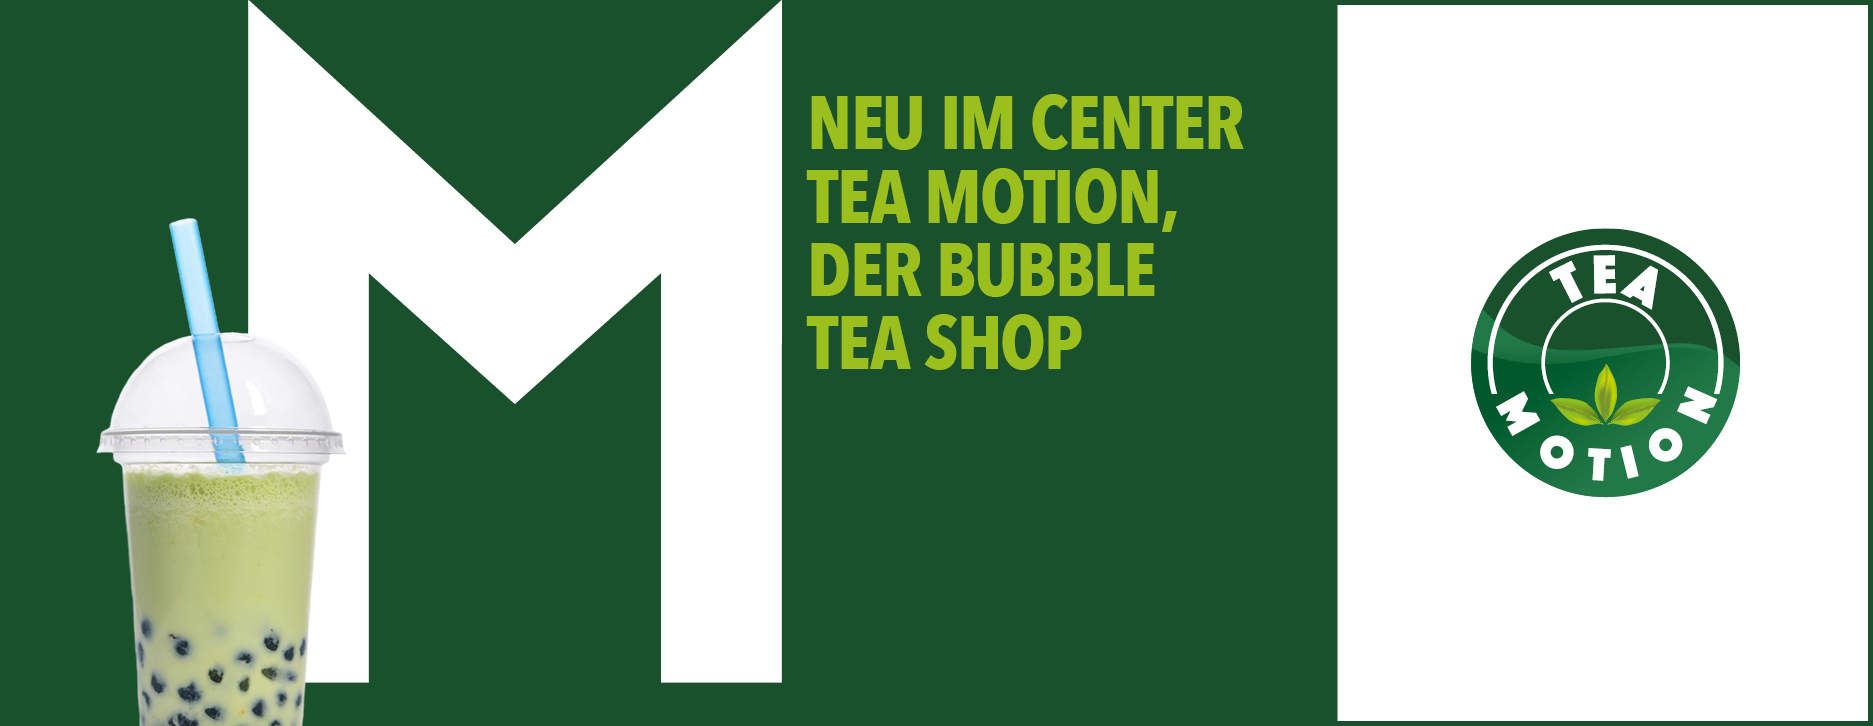 Tea Motion News Header 